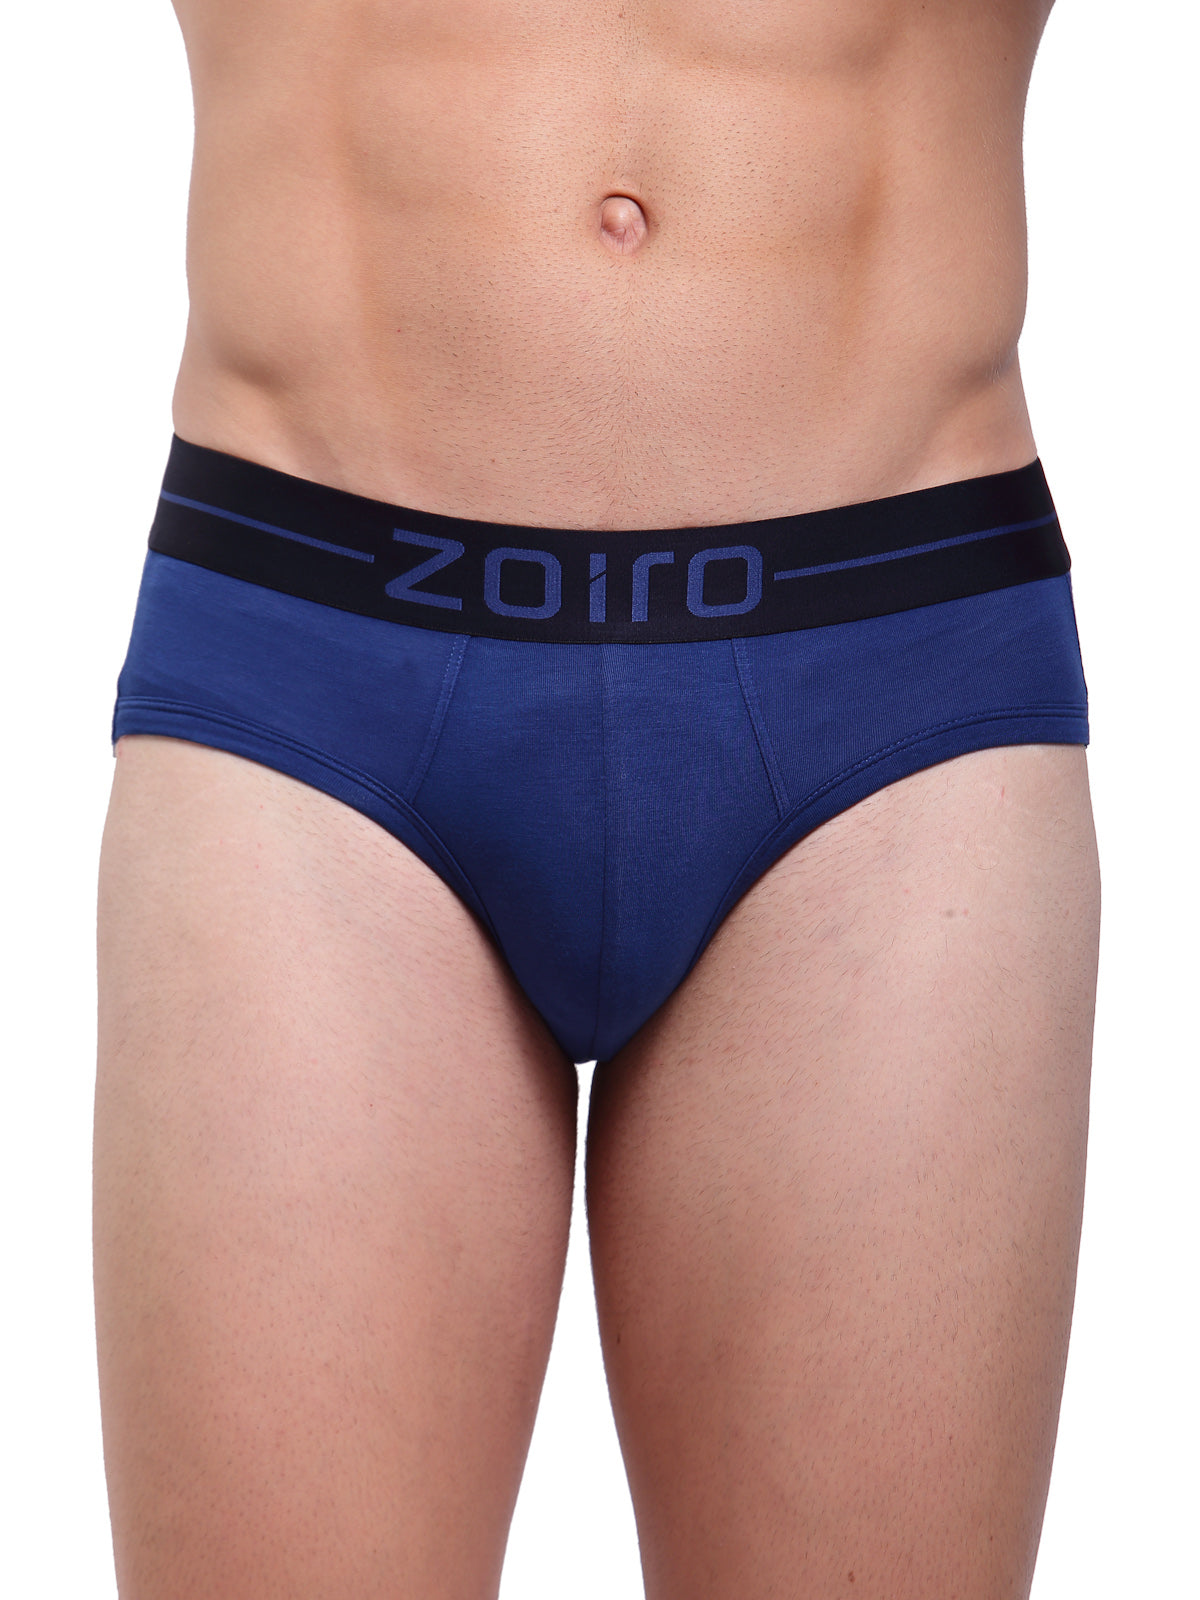 Zoiro Men&#39;s Cotton Spandex Softs Brief - Federal Blue